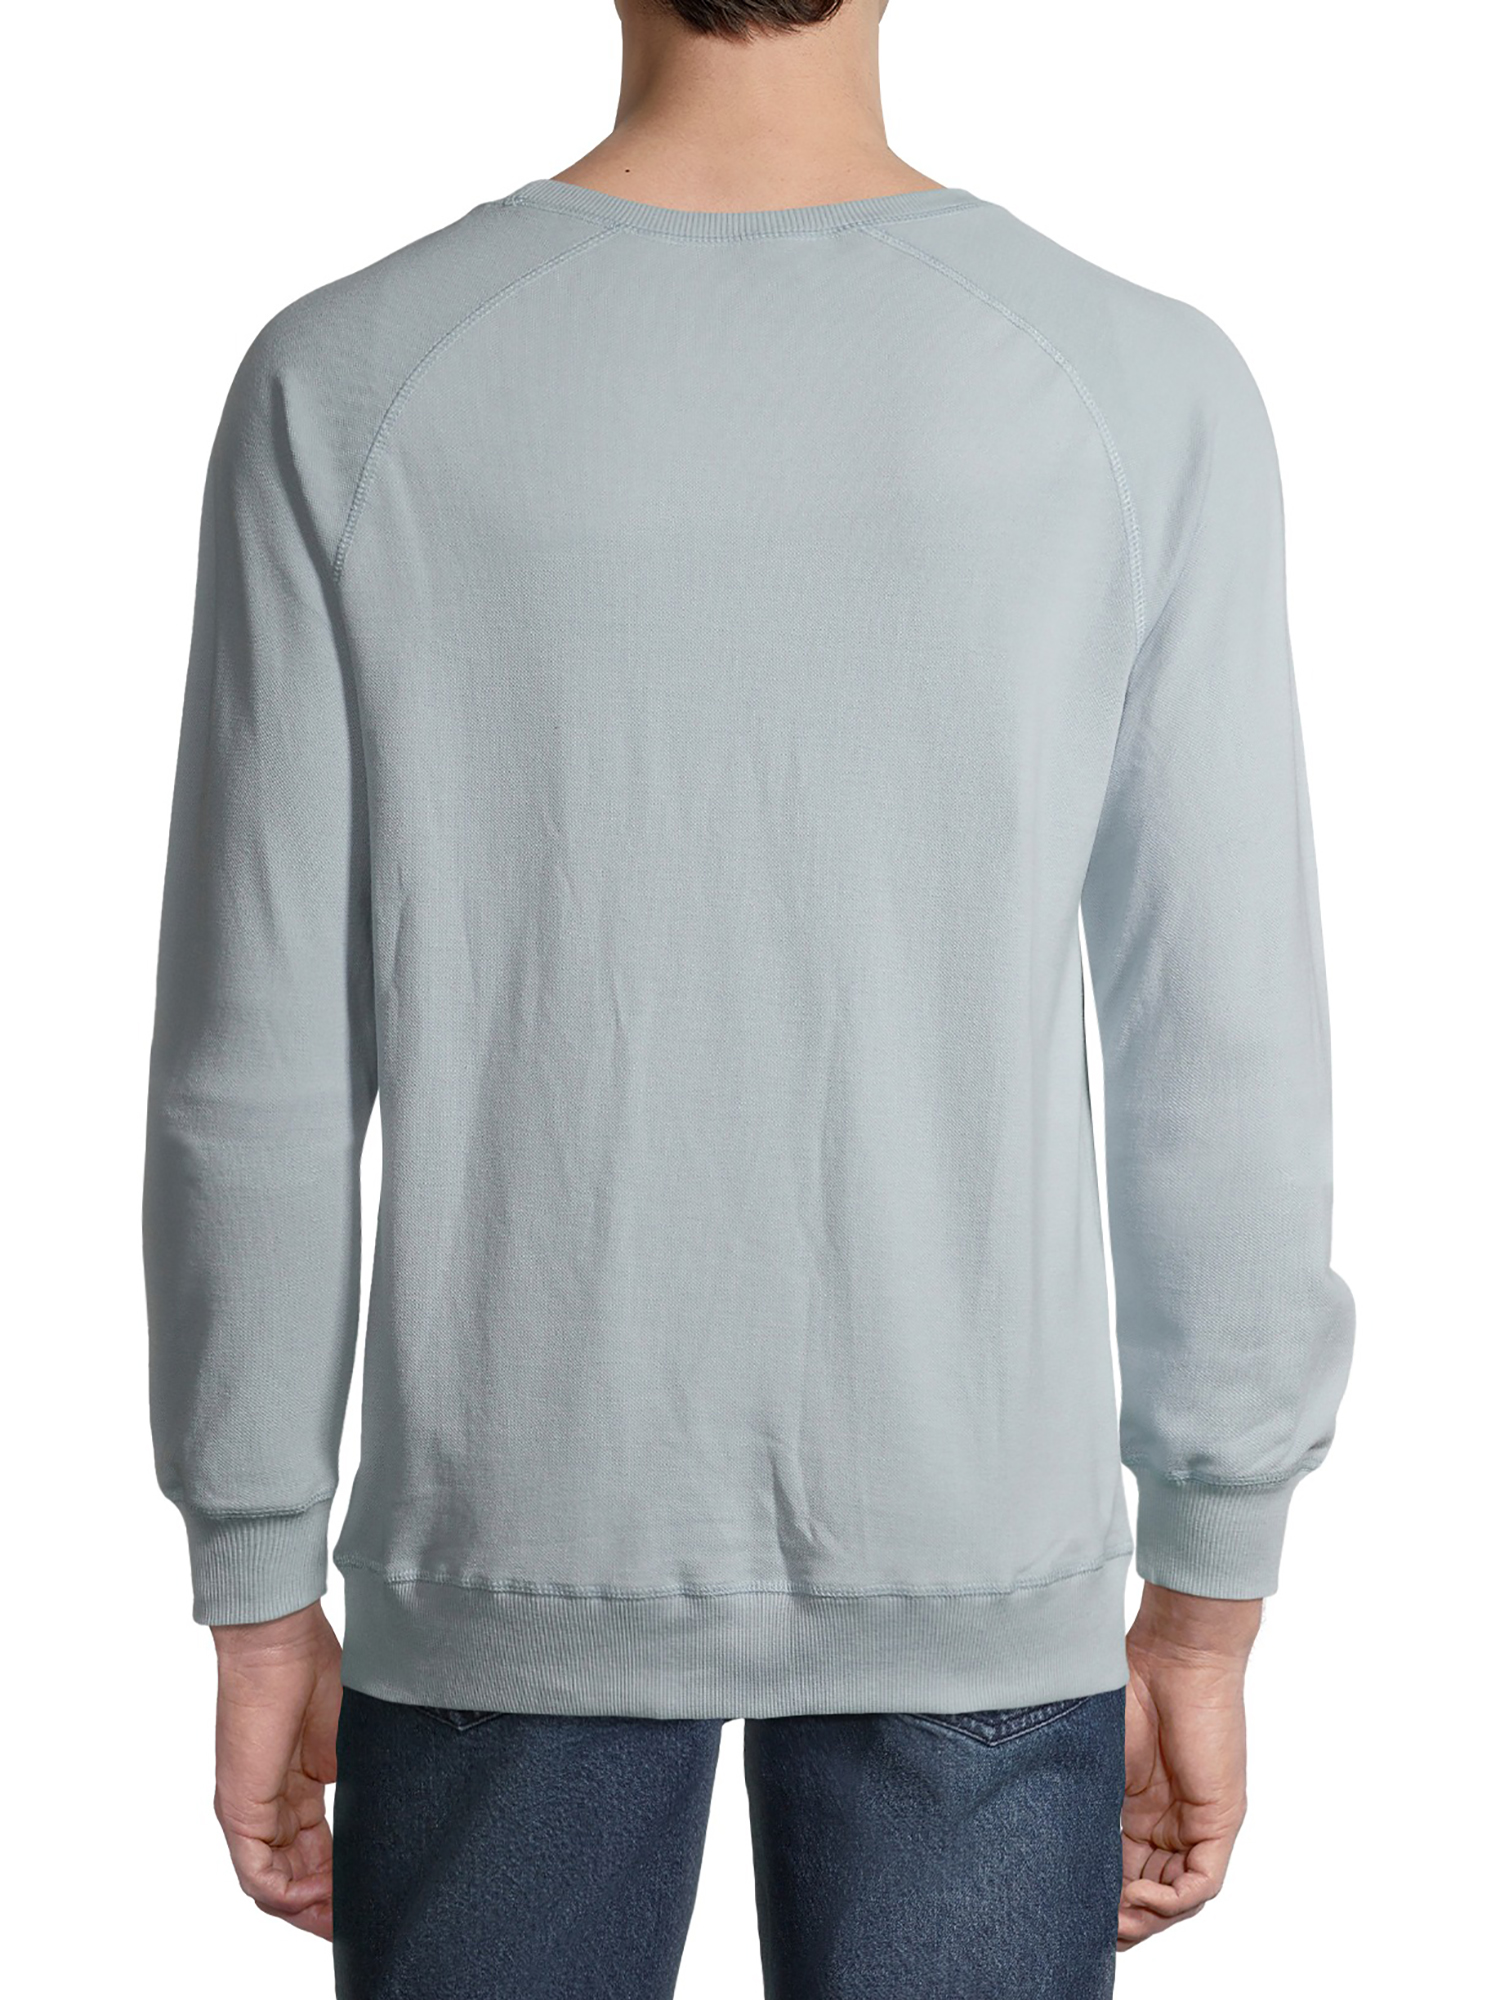 Hollywood Men's Colorblocked Pique Long Sleeve Crew Shirt, S-2XL, Mens Long Sleeve T-Shirts - image 3 of 6